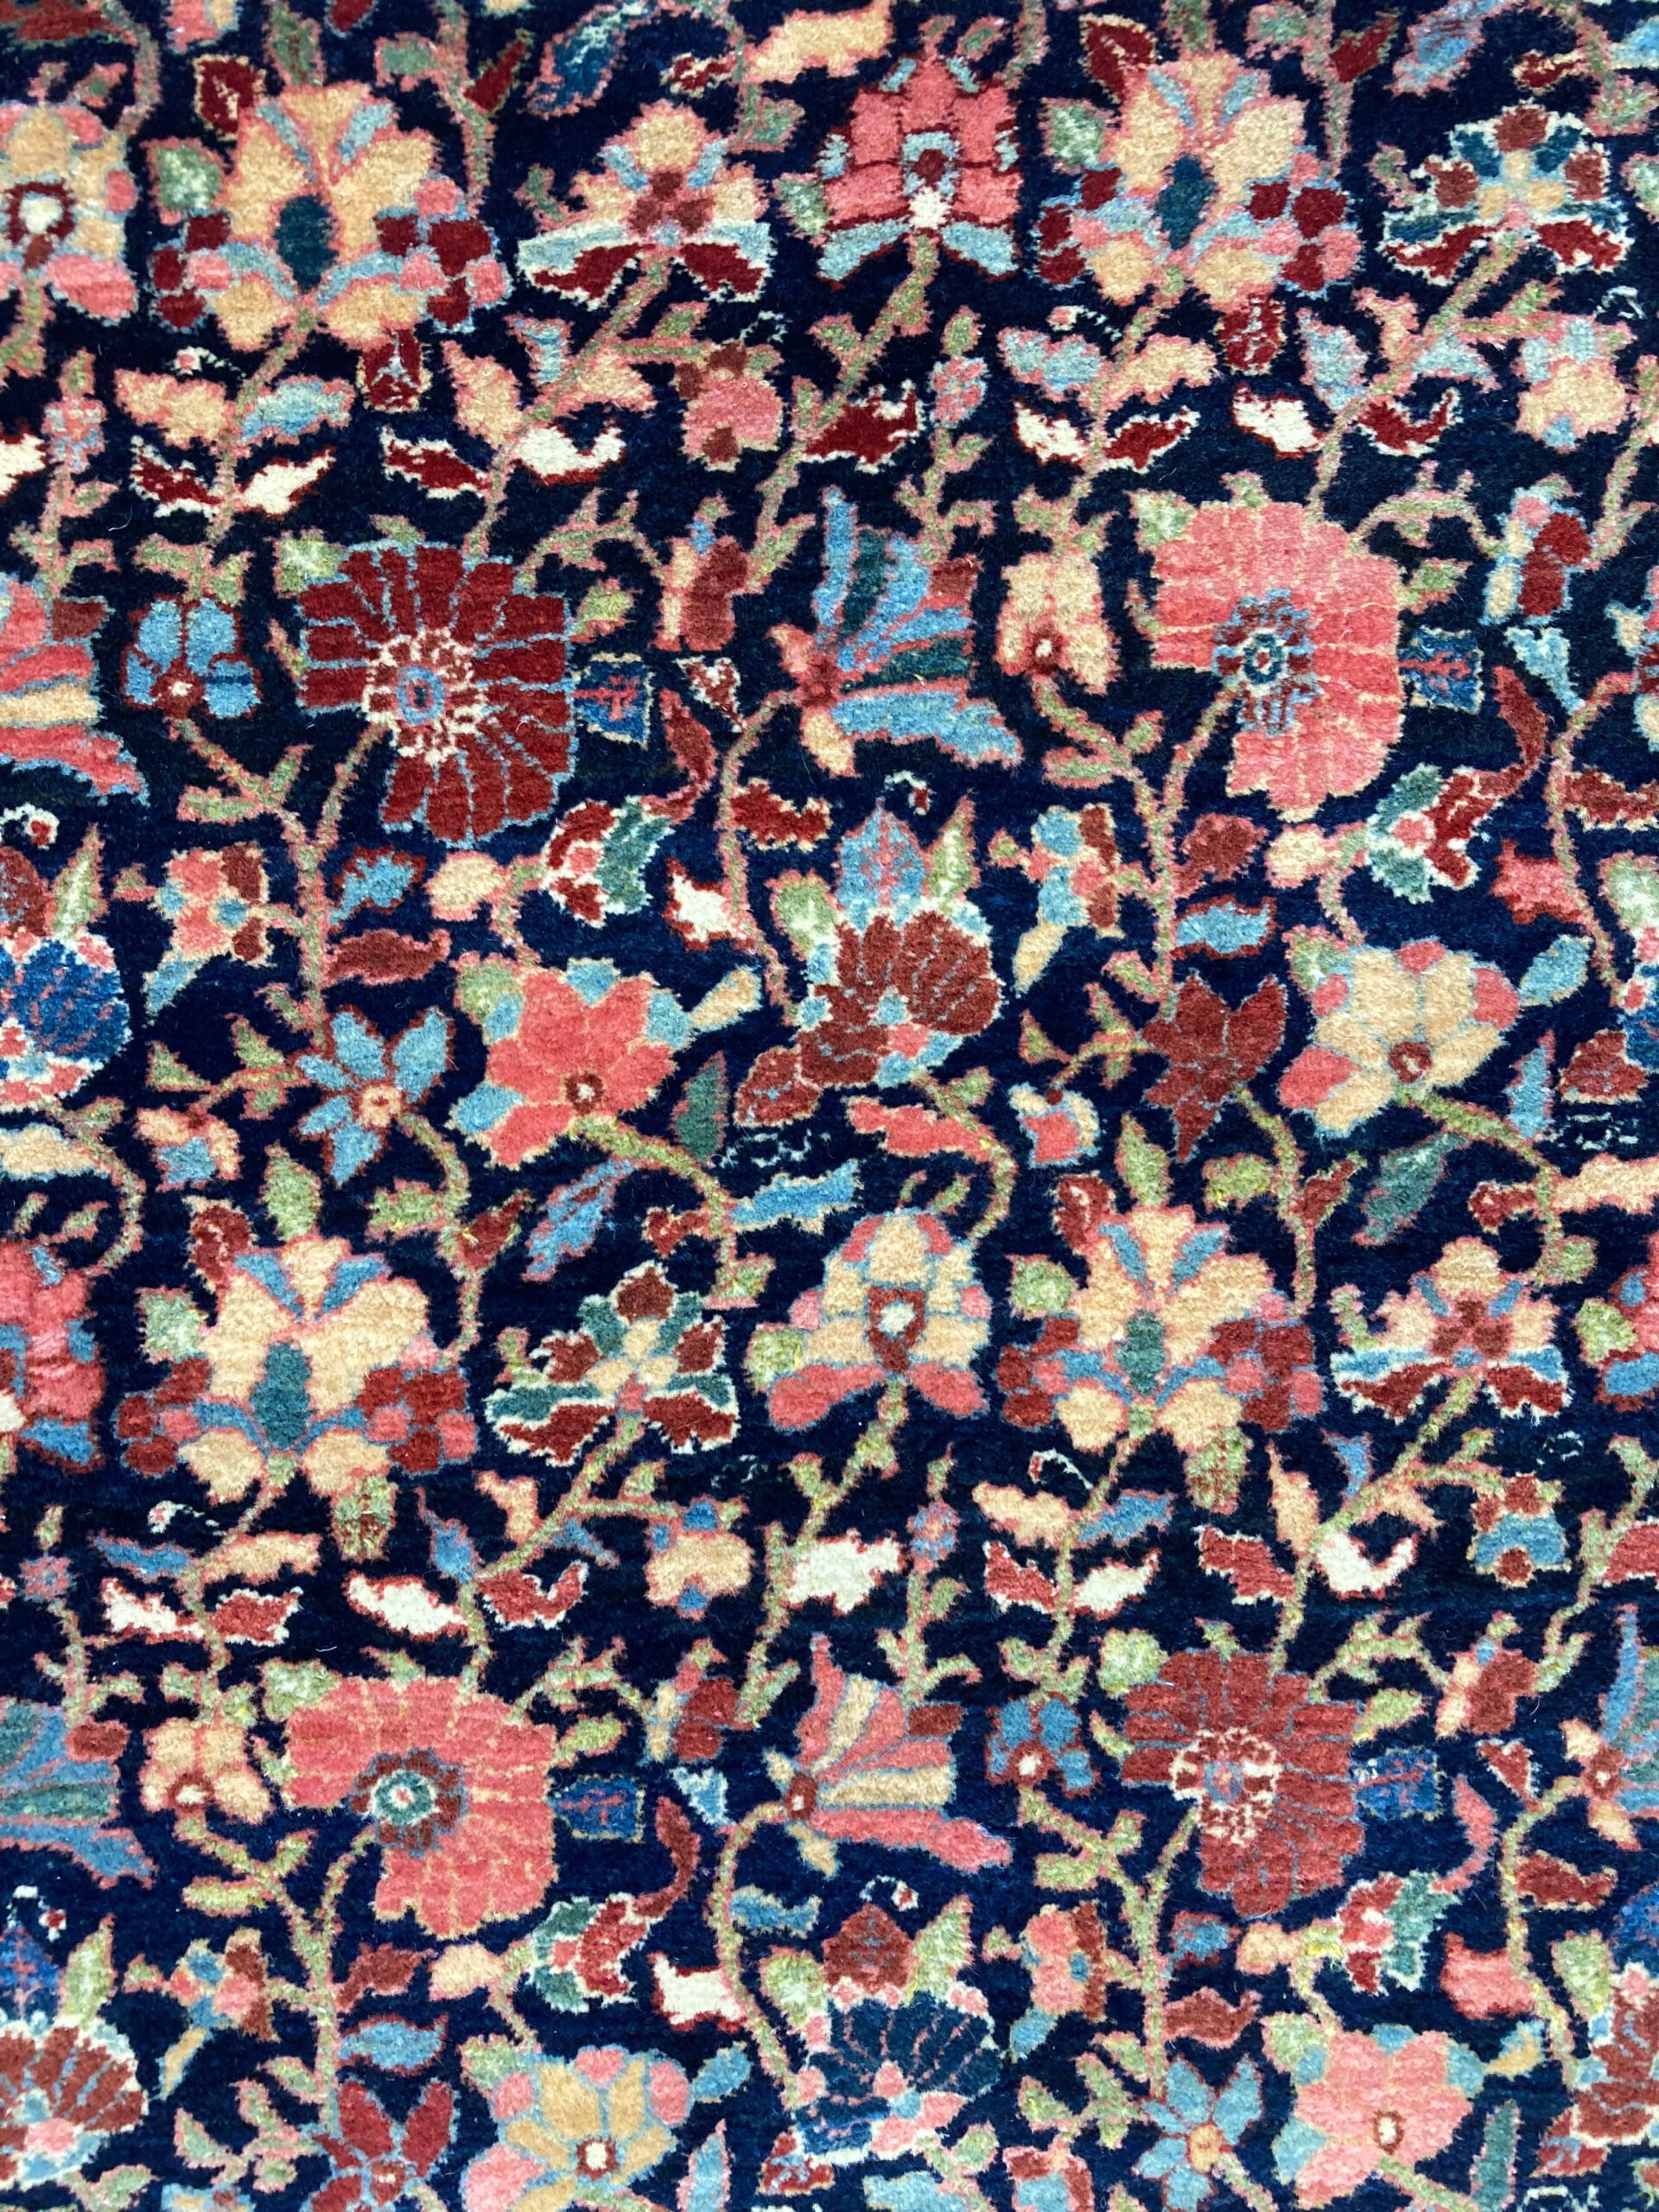 Millefleur design field detail from an antique Persian Bidjar carpet - Douglas Stock Gallery, antique Oriental rugs, Boston,MA area, New York antique Oriental rugs